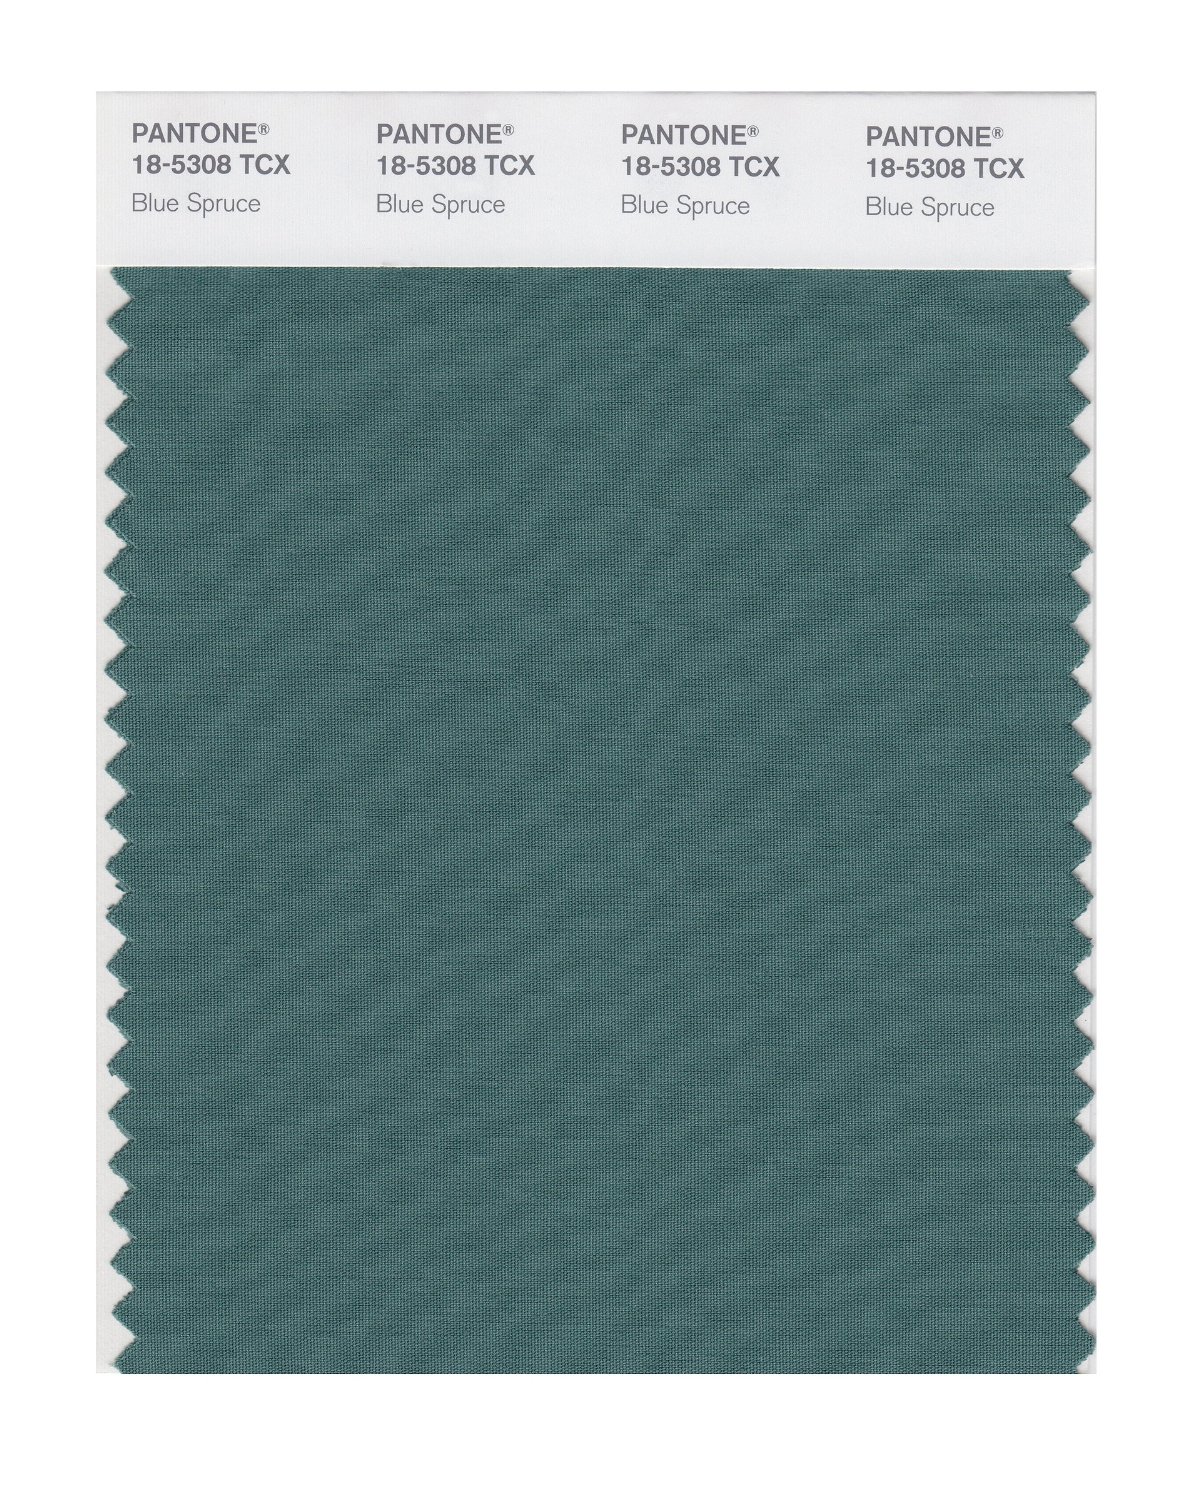 Pantone Cotton Swatch 18-5308 Blue Spruce